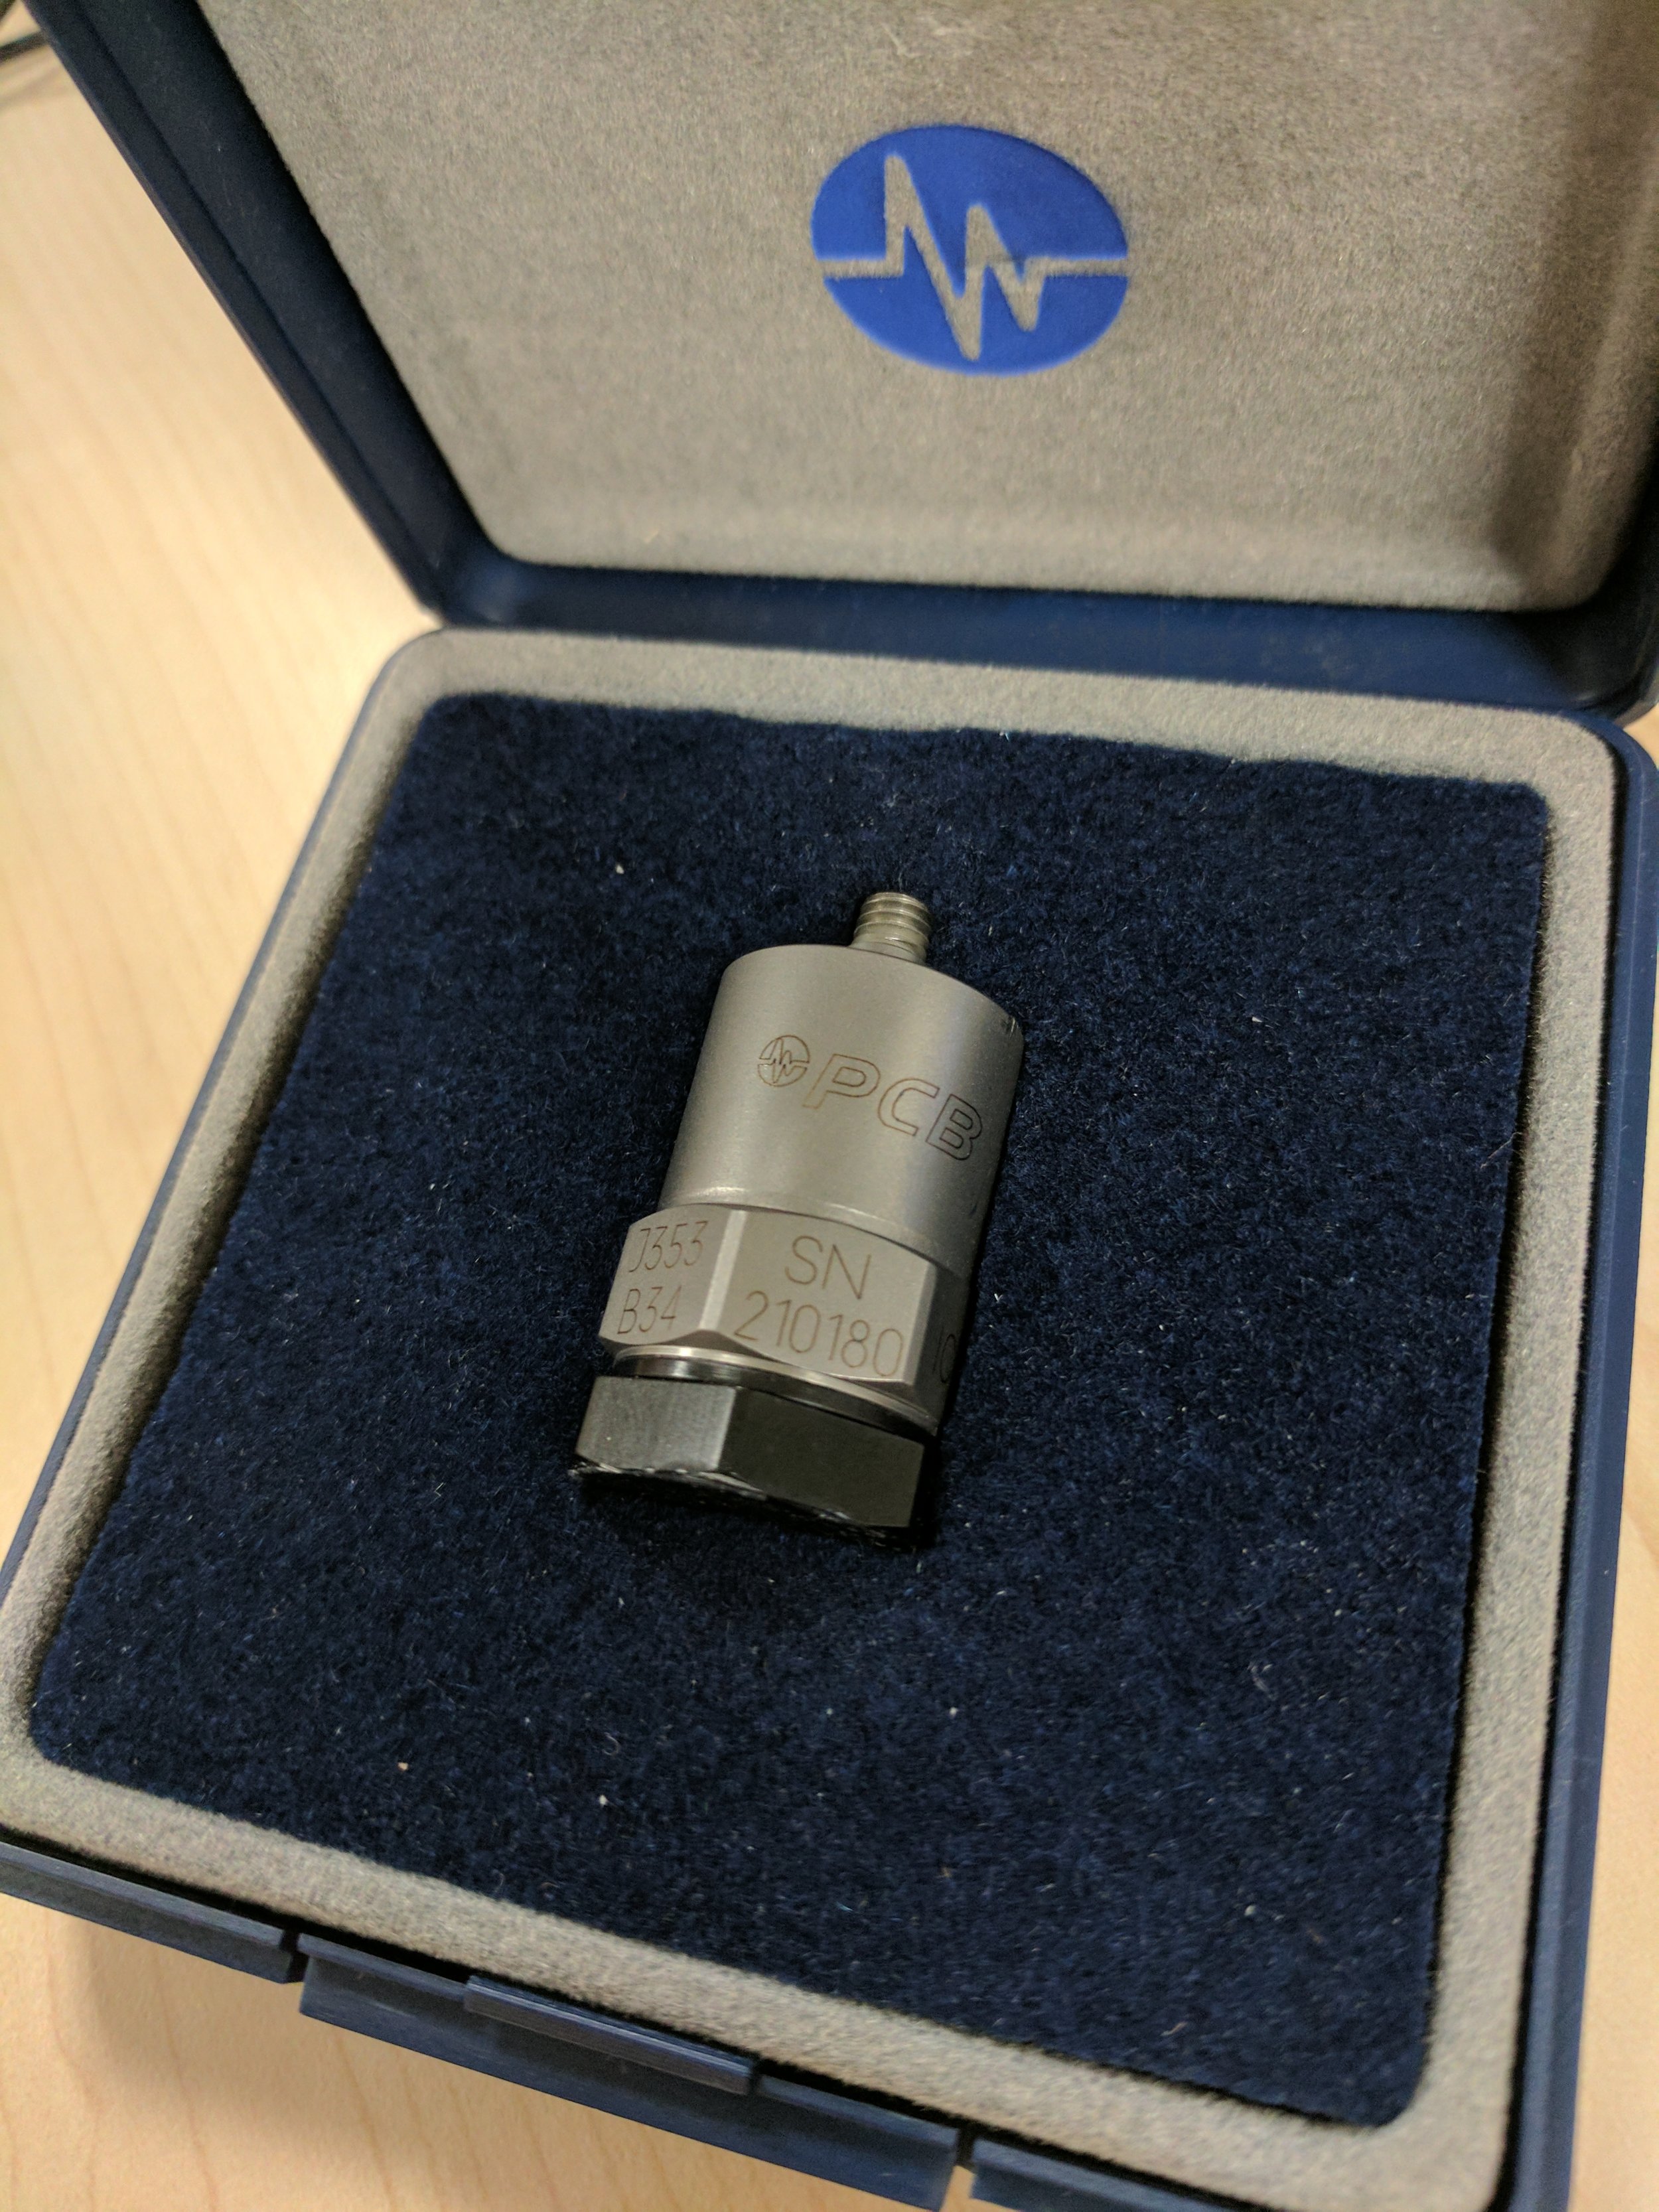 Sensor for vibration testing